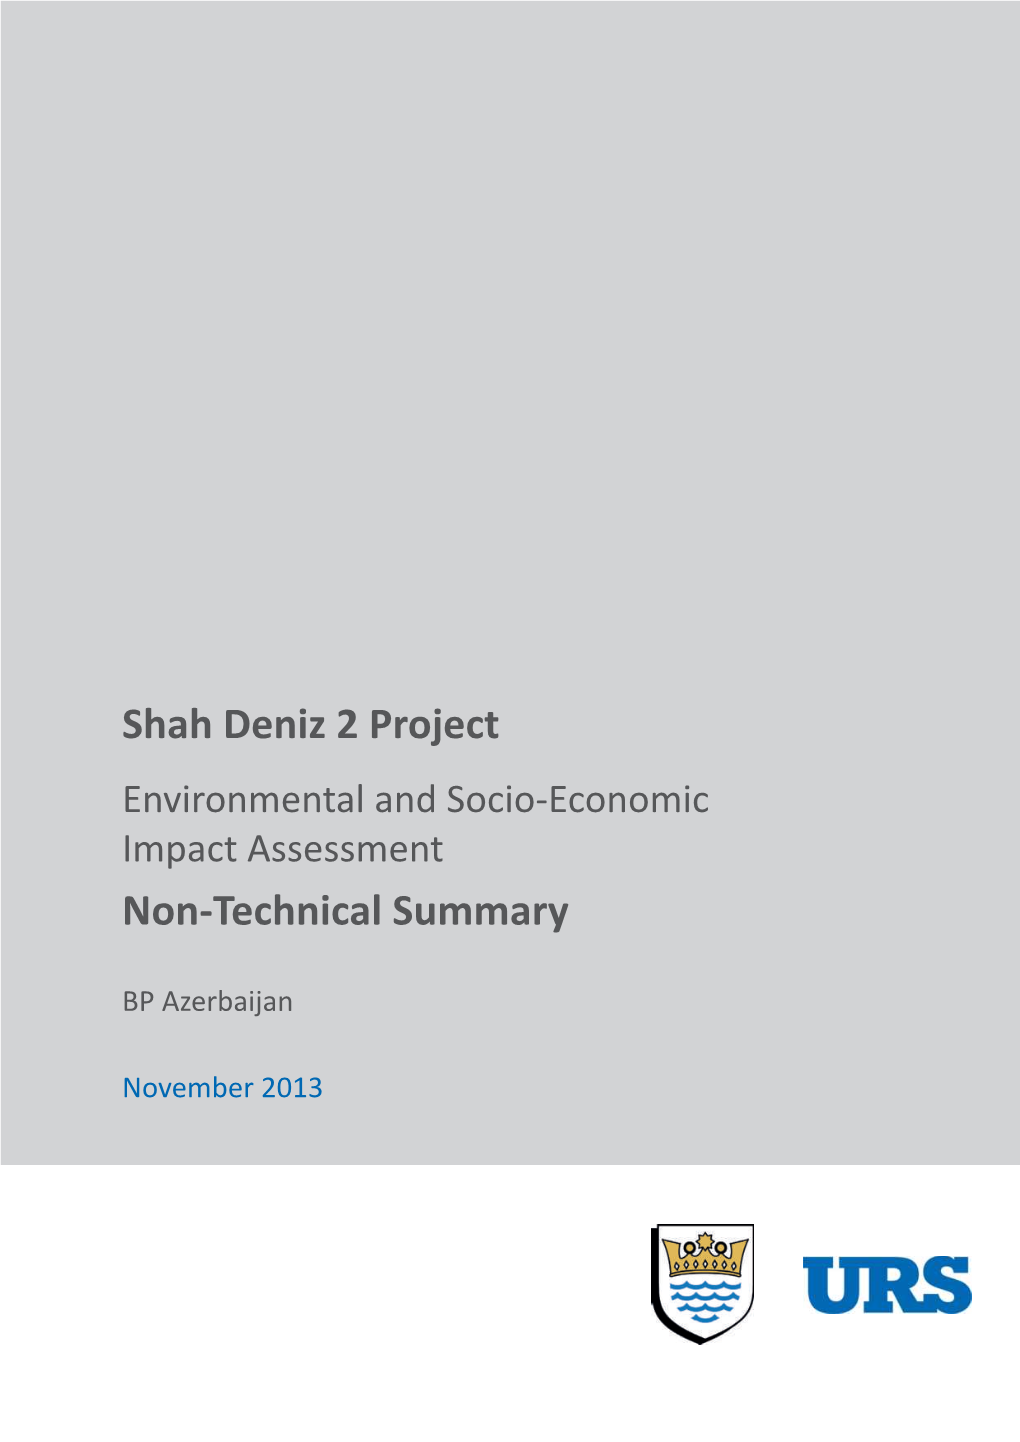 Shah Deniz 2 Project Environmental and Socio-Economic Impact Assessment Non-Technical Summary